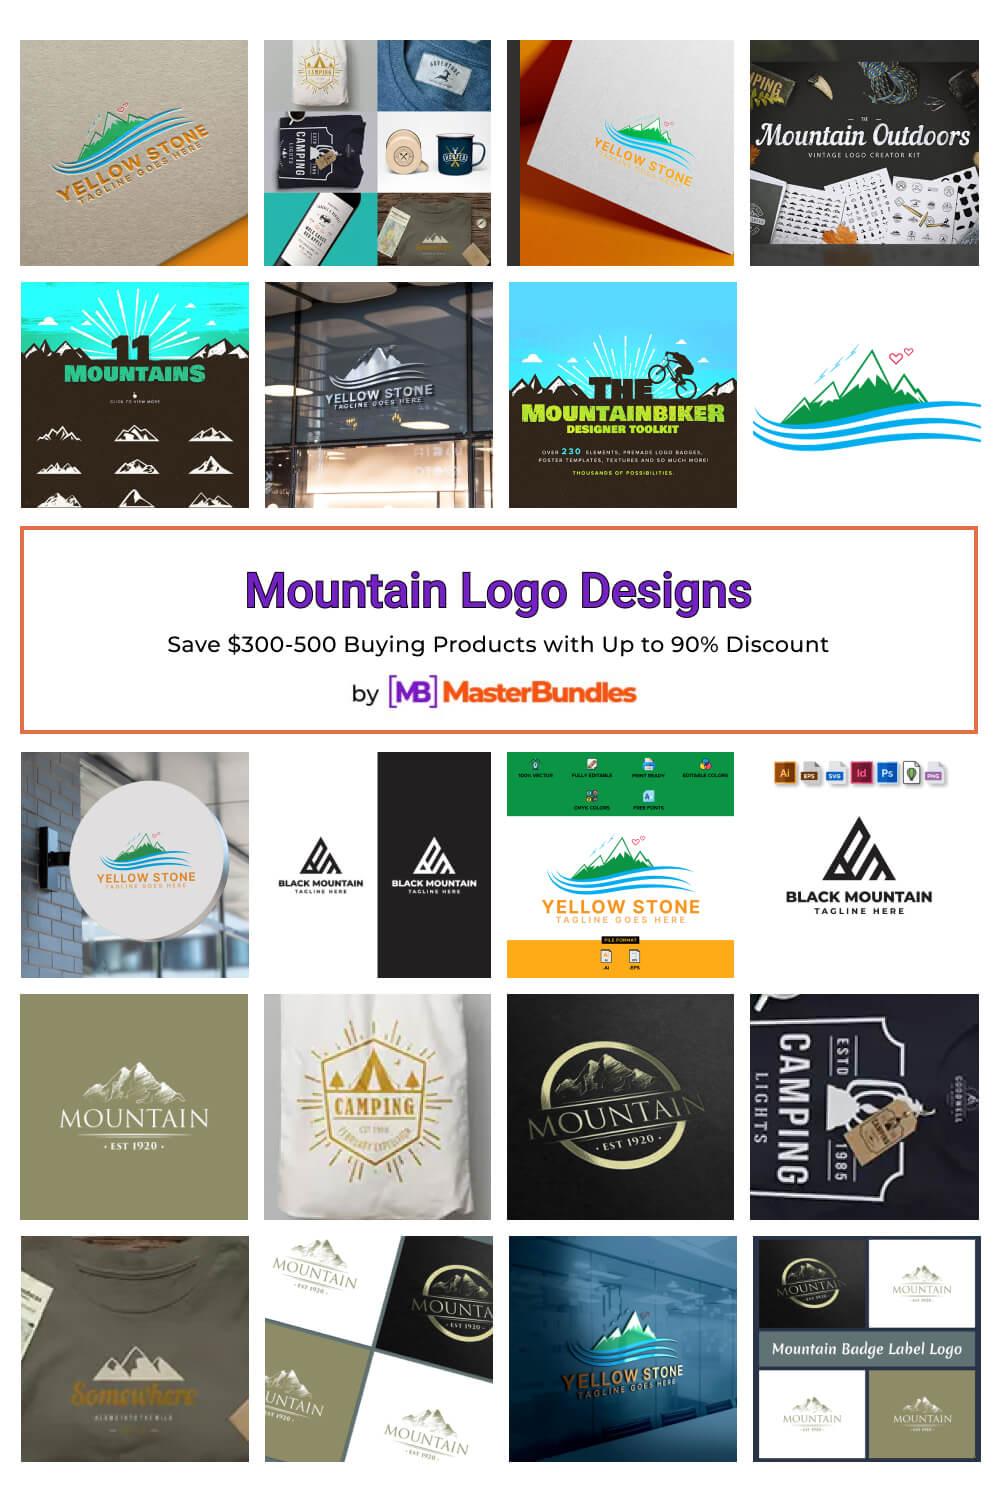 mountain logo designs pinterest image.